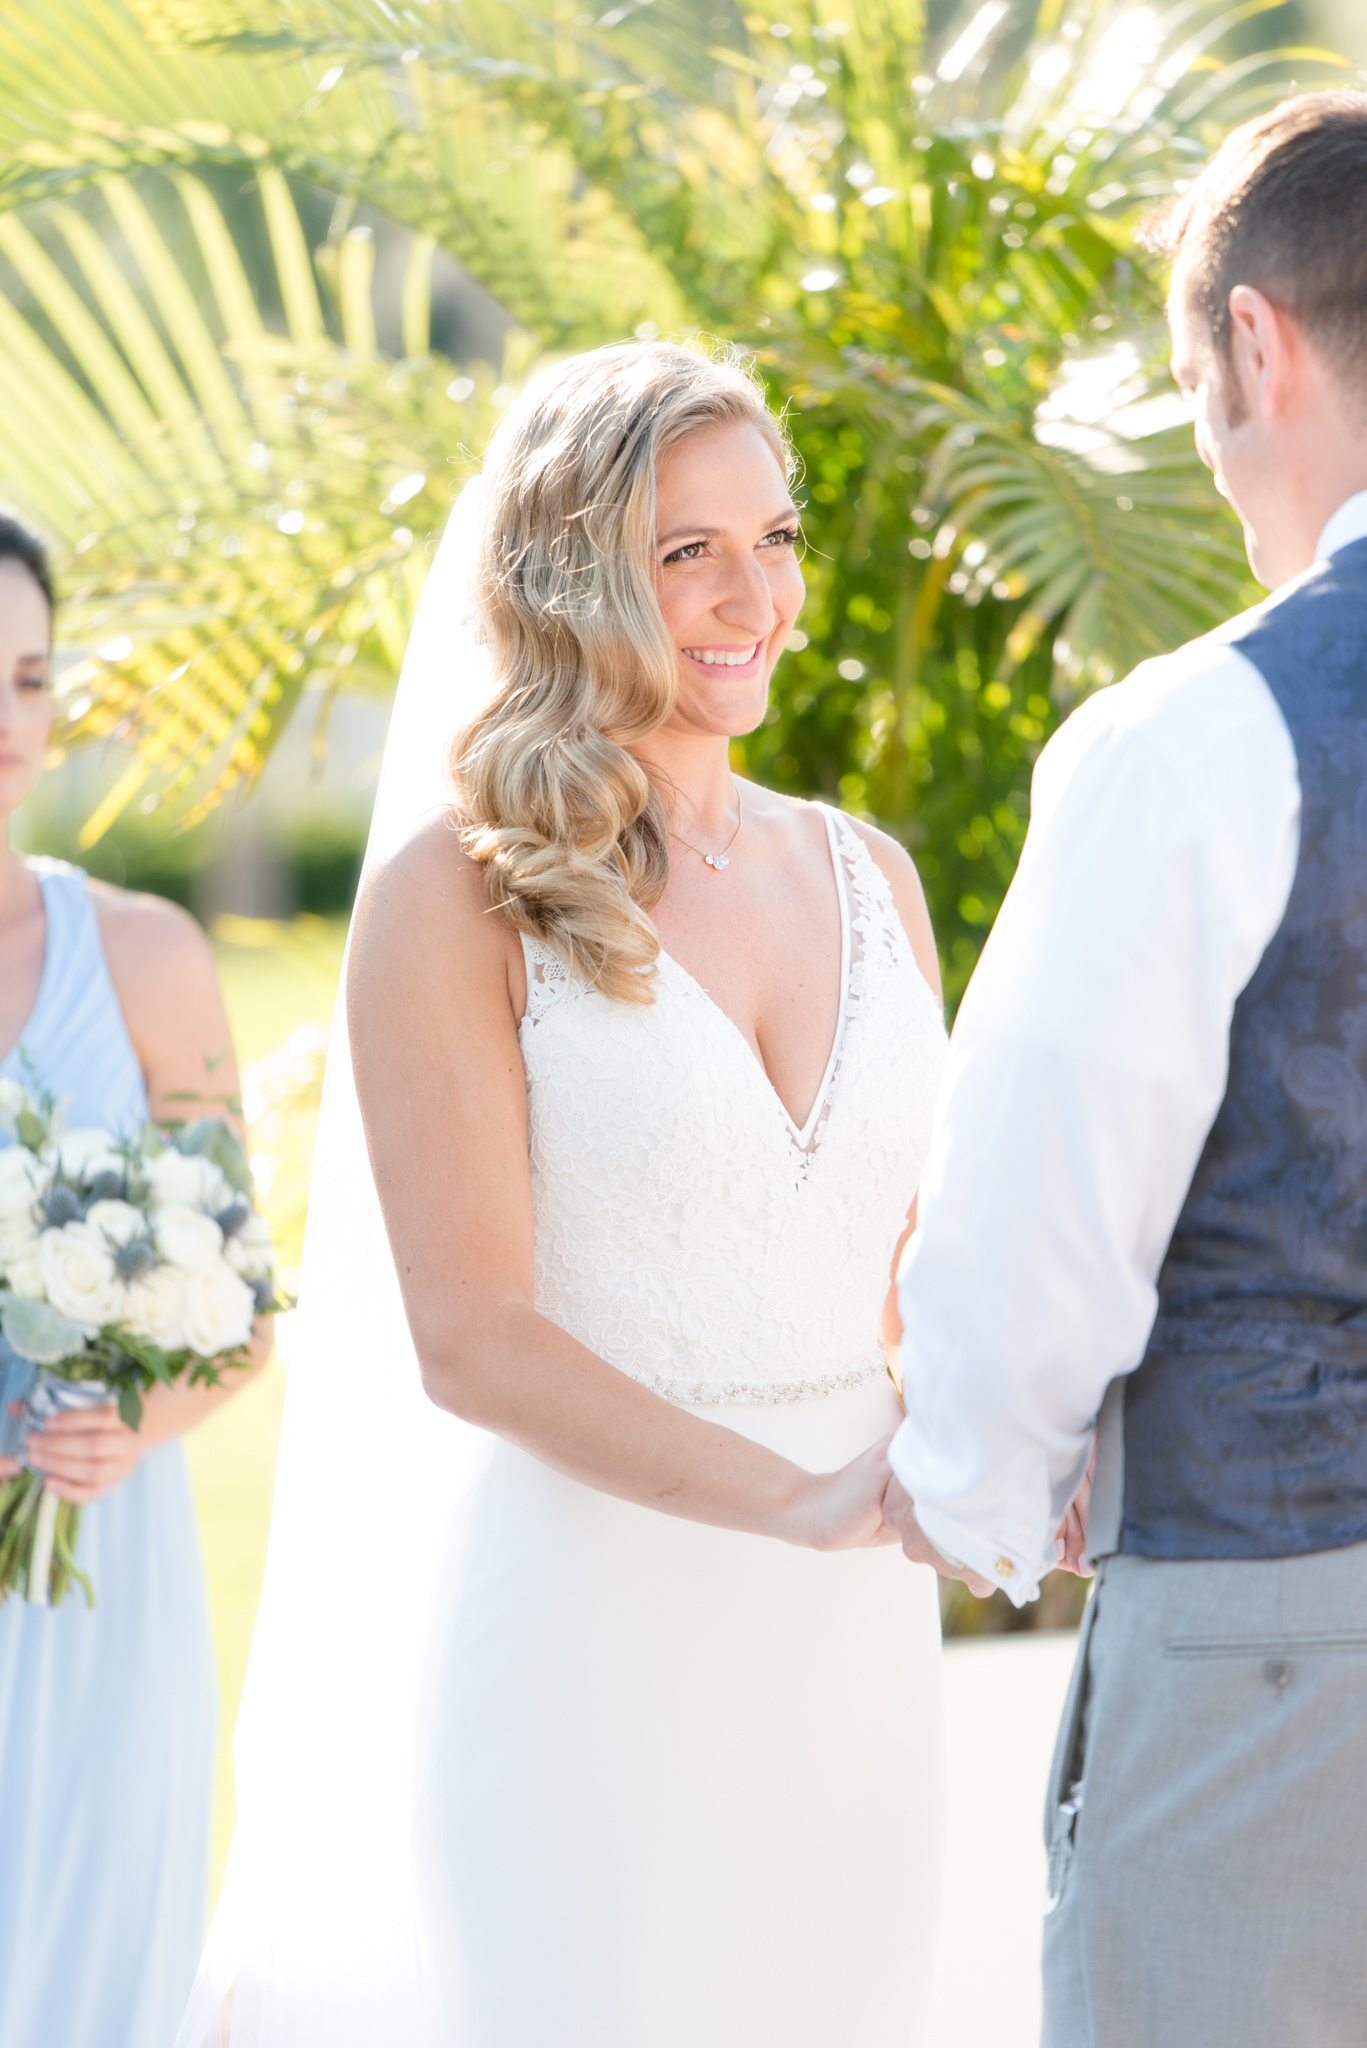 Bride smiles during wedding ceremony.